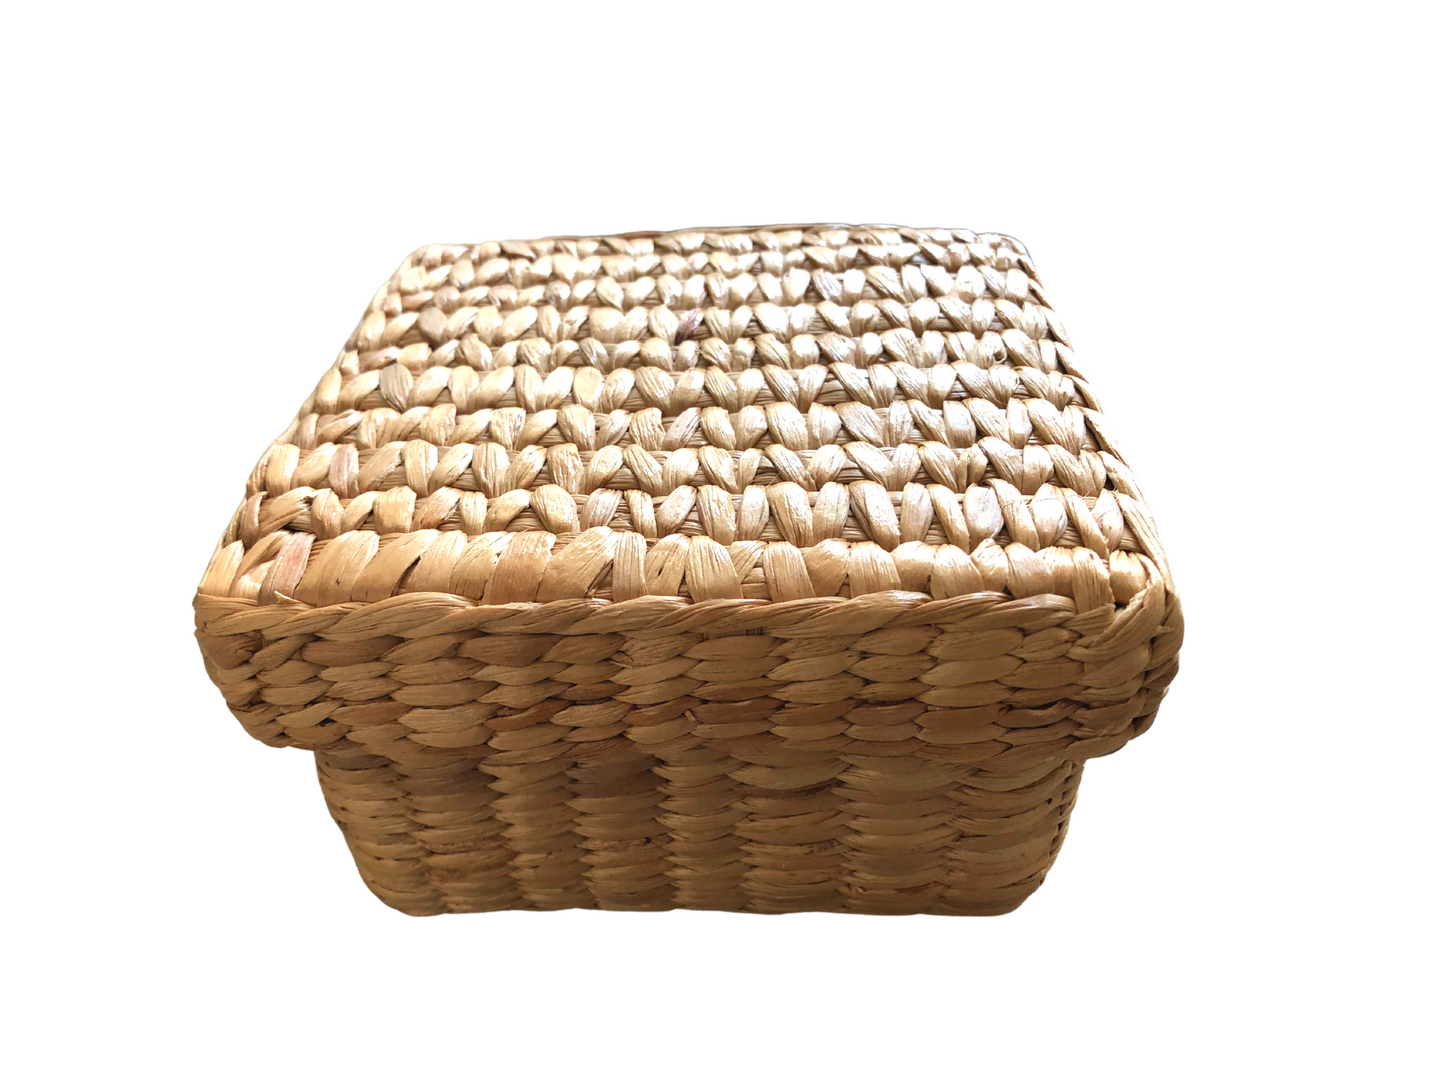 C600030021-Thailand pure handmade rattan square storage box with lid